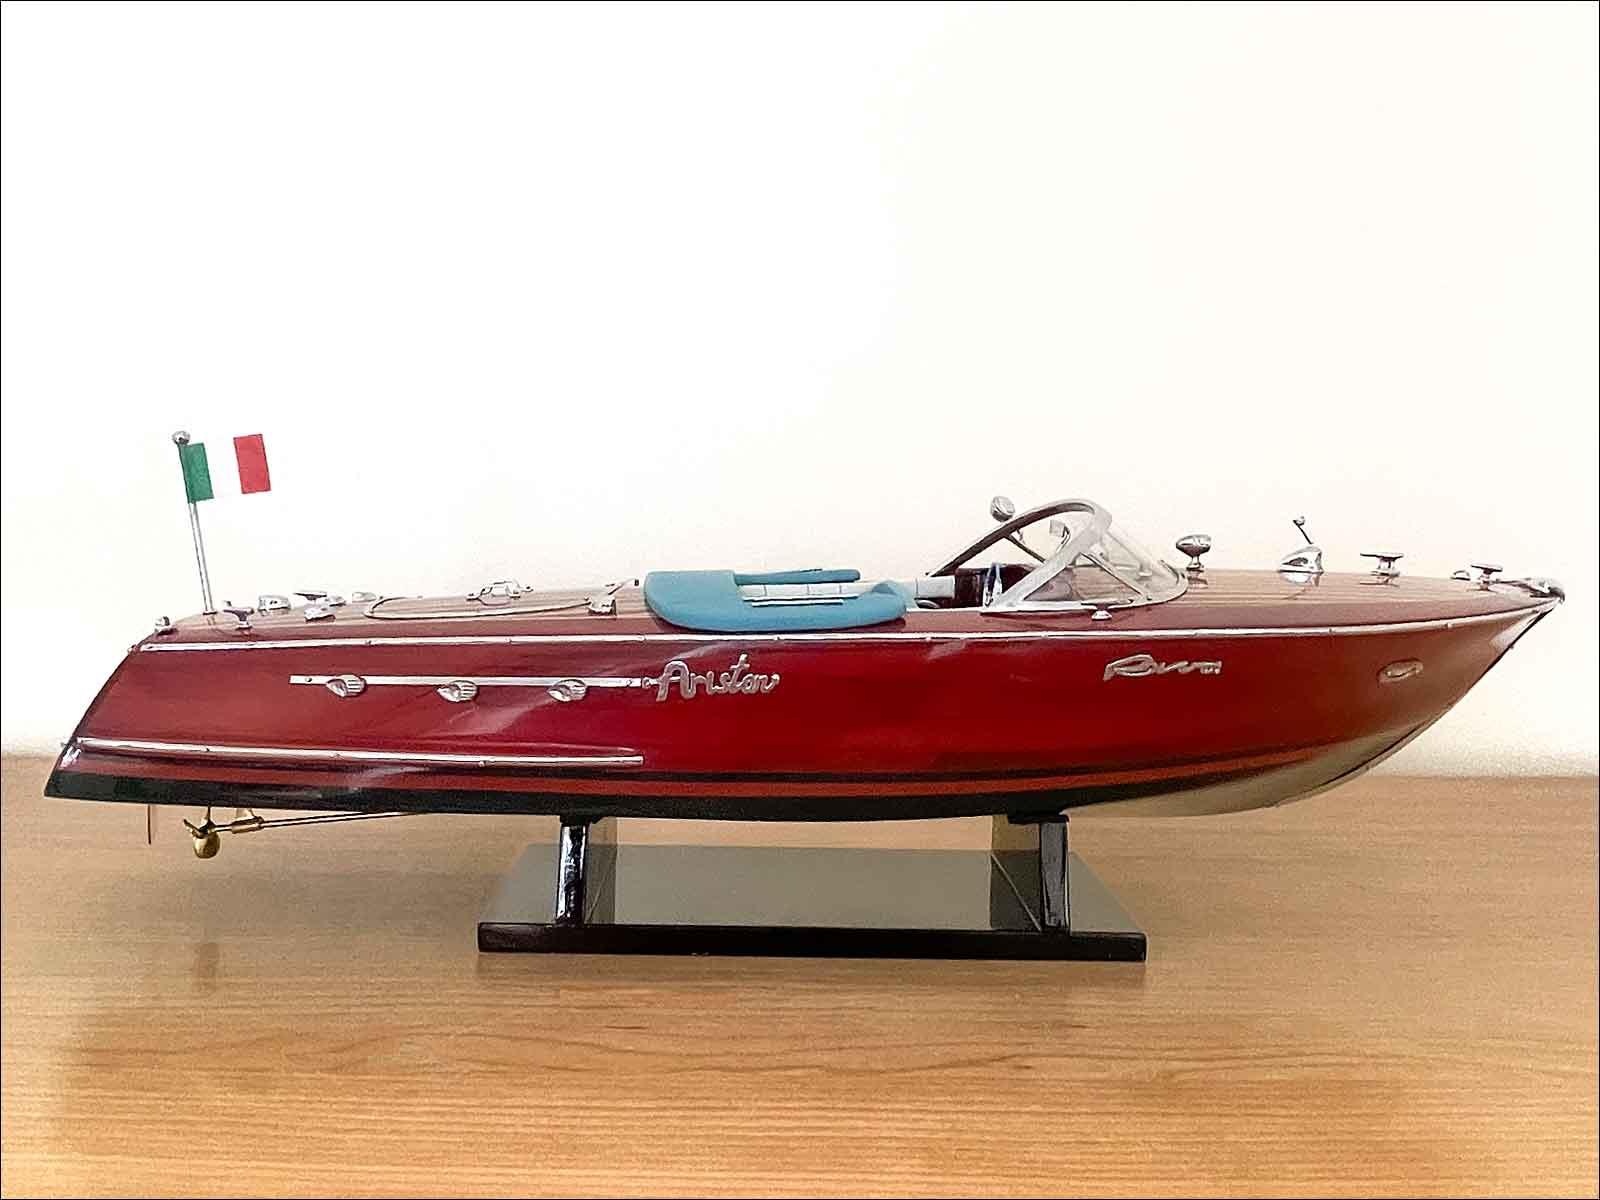 50 cm long model boat